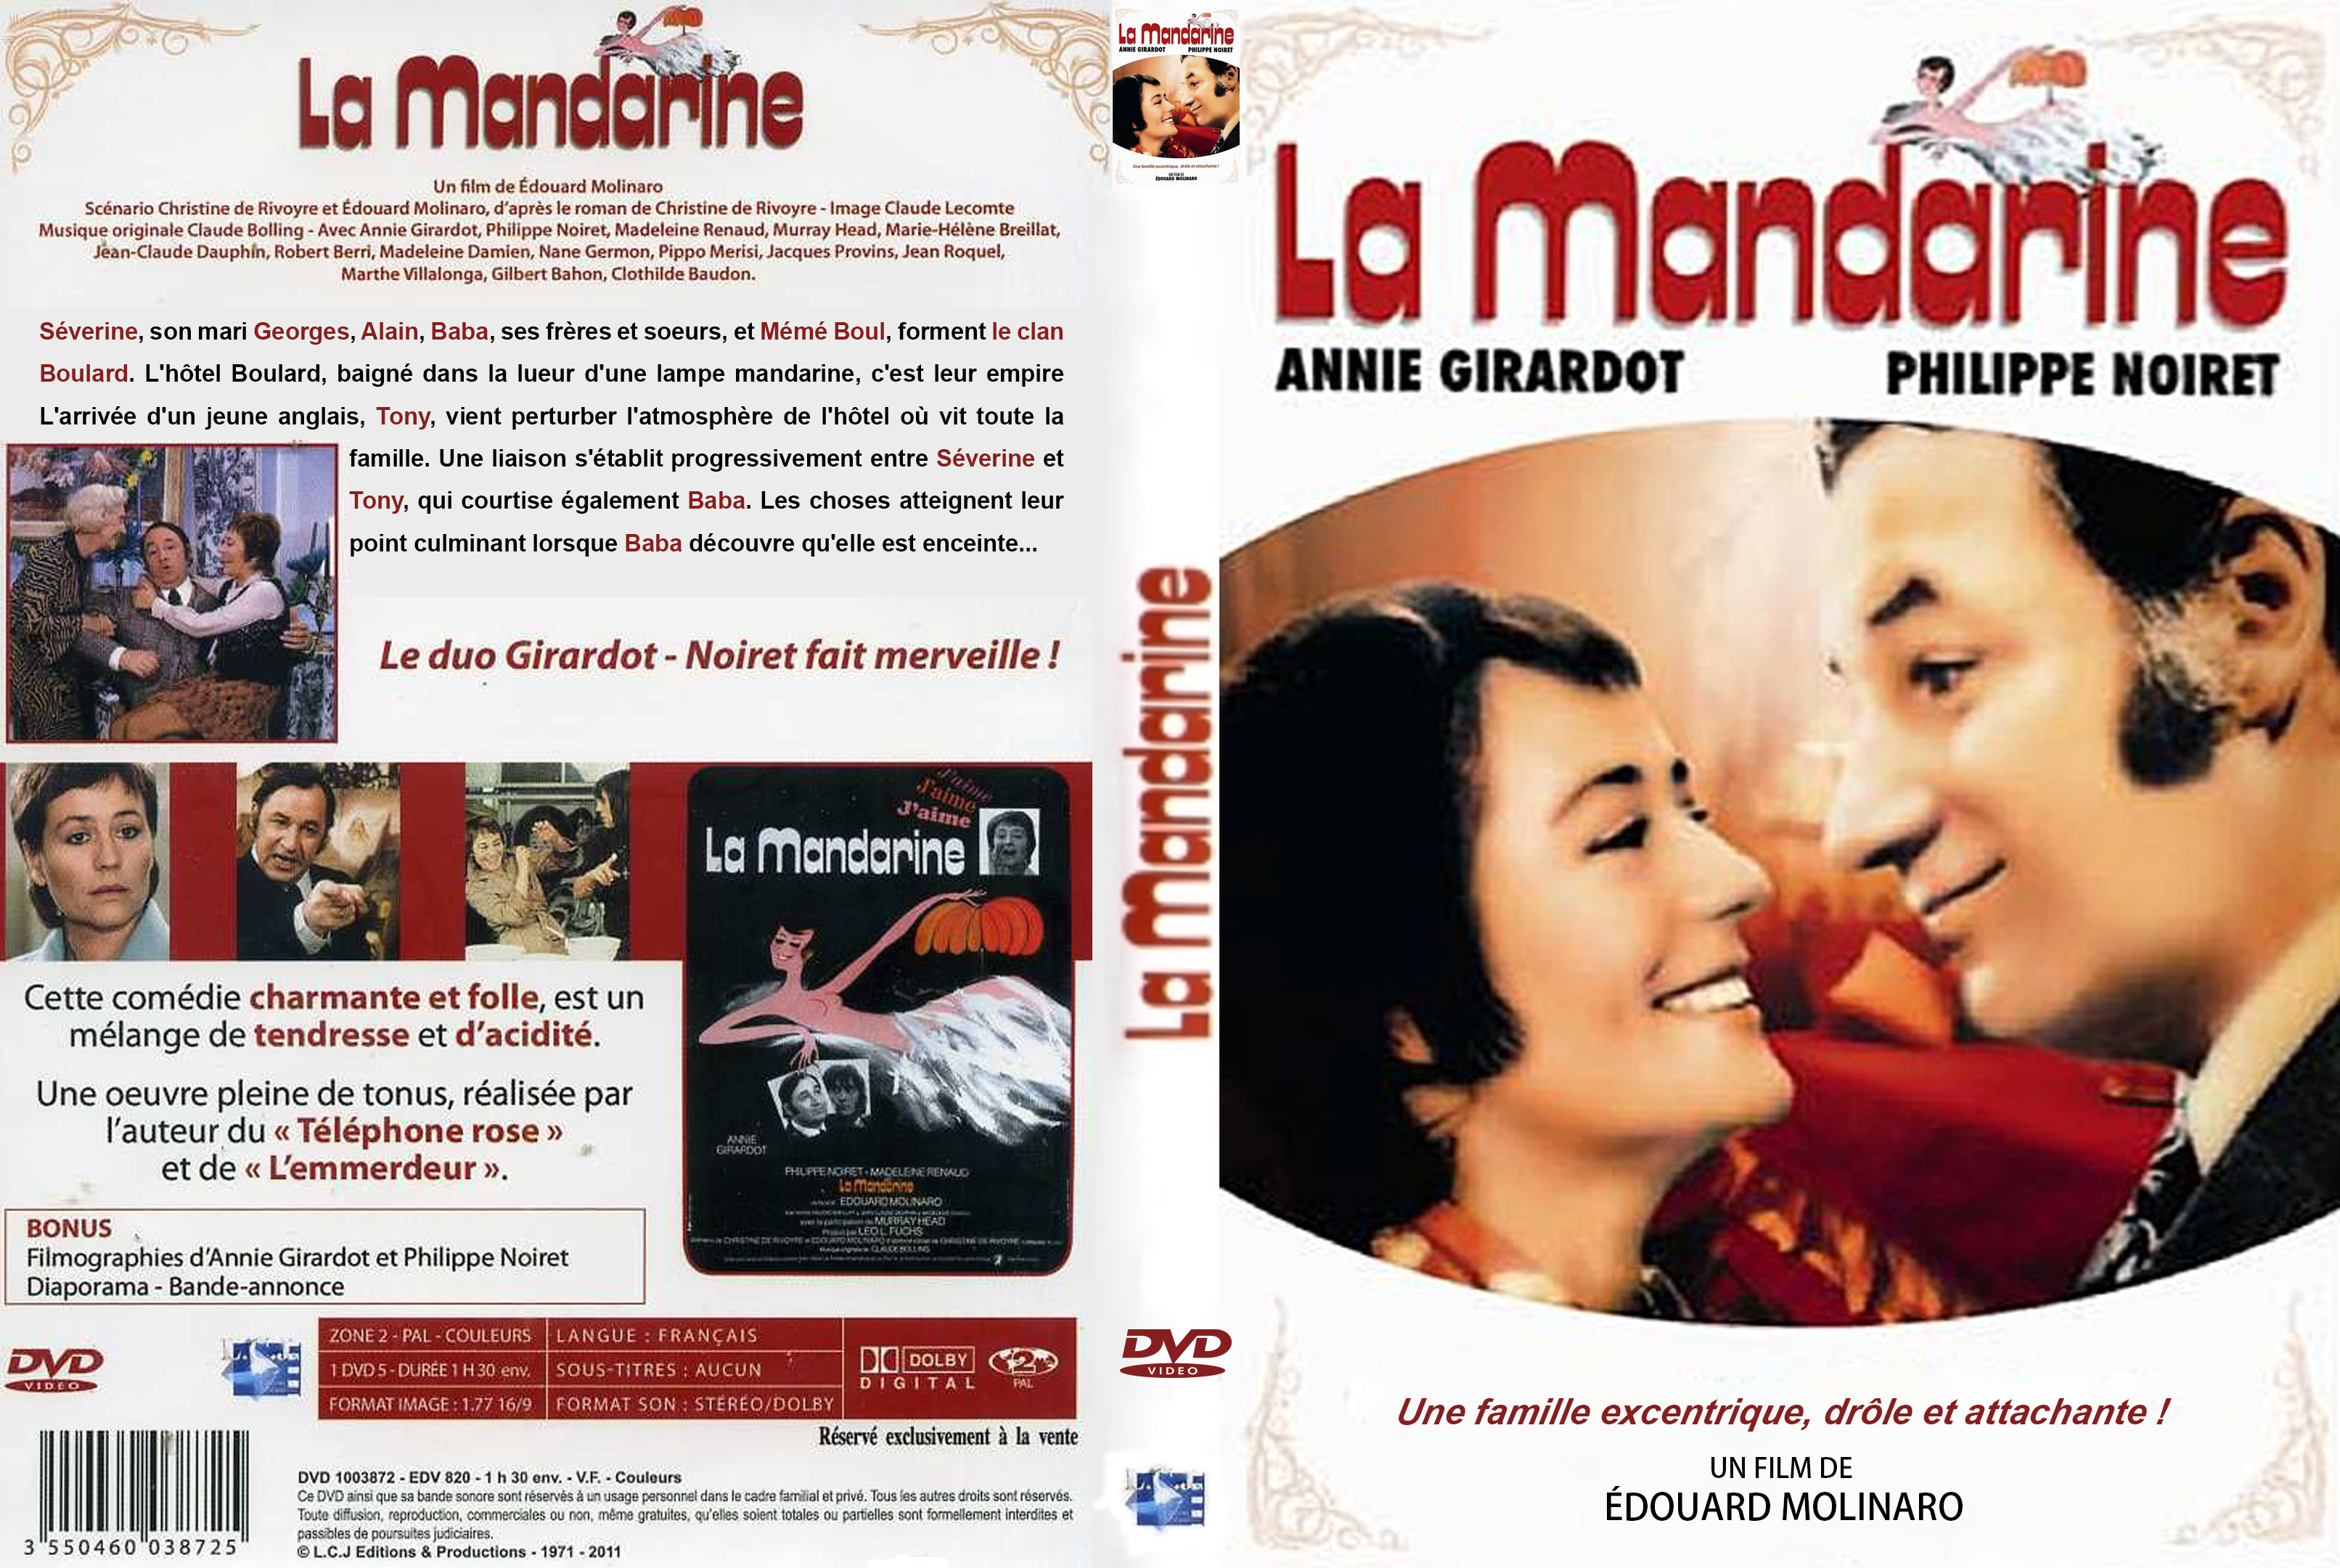 Jaquette DVD La mandarine custom